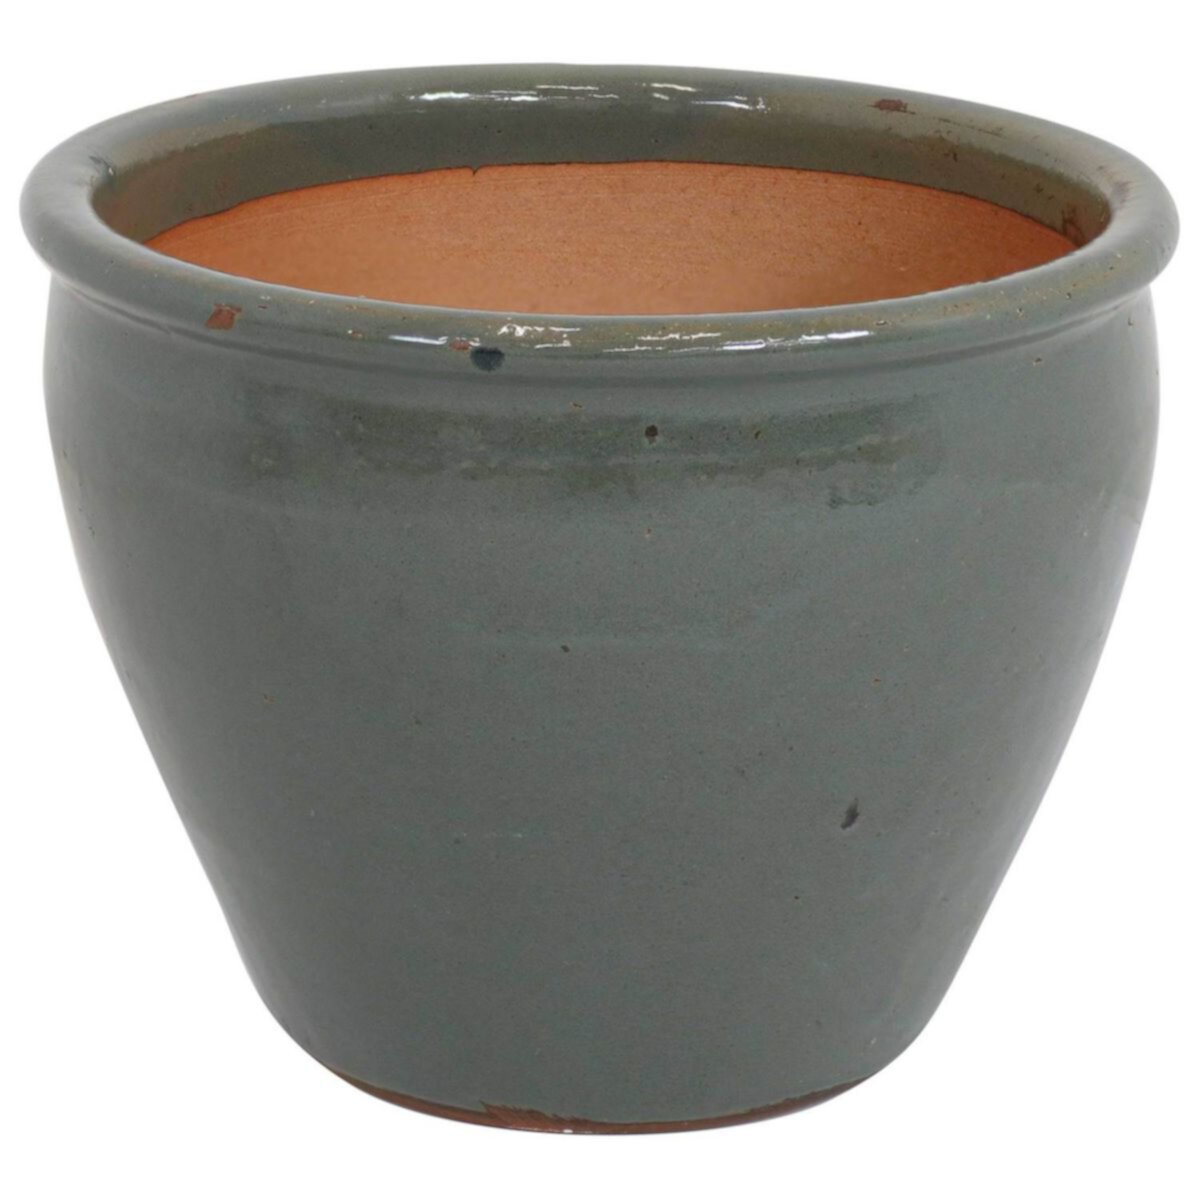 Sunnydaze Chalet Ceramic Indoor/Outdoor Planter - Gray - 15-Inch Sunnydaze Decor